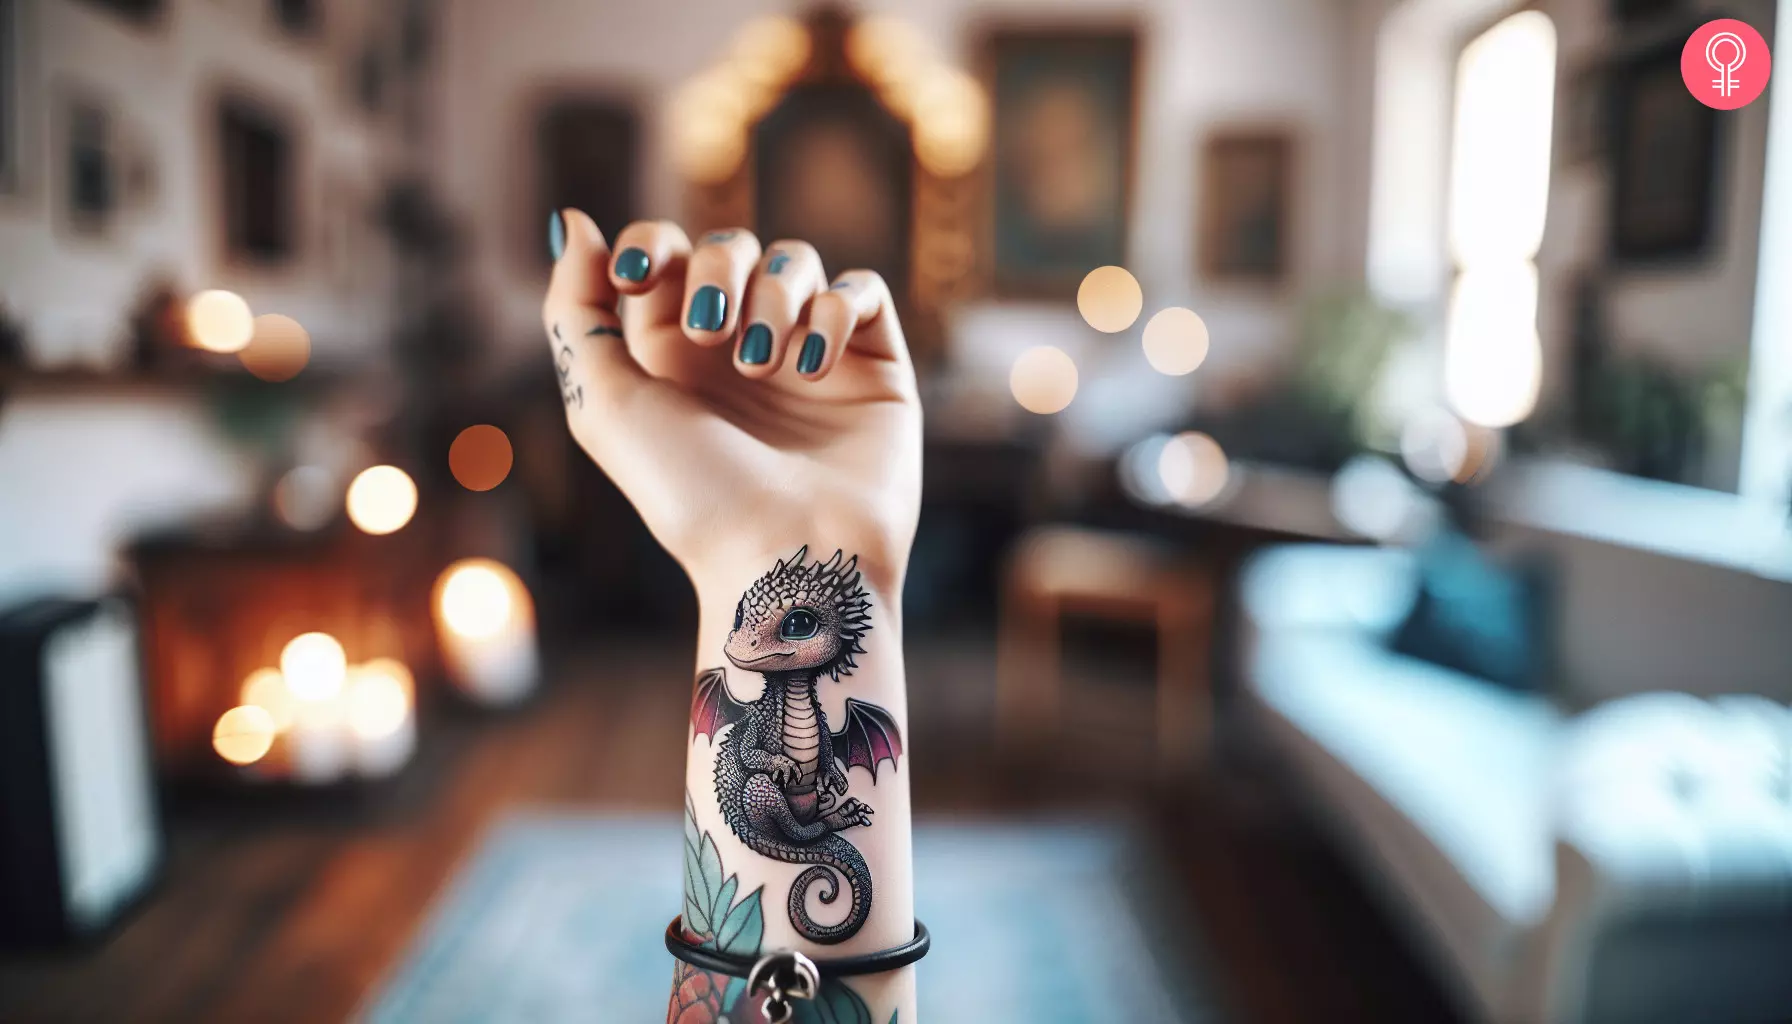 A cute cartoon-style baby dragon tattoo on the wrist